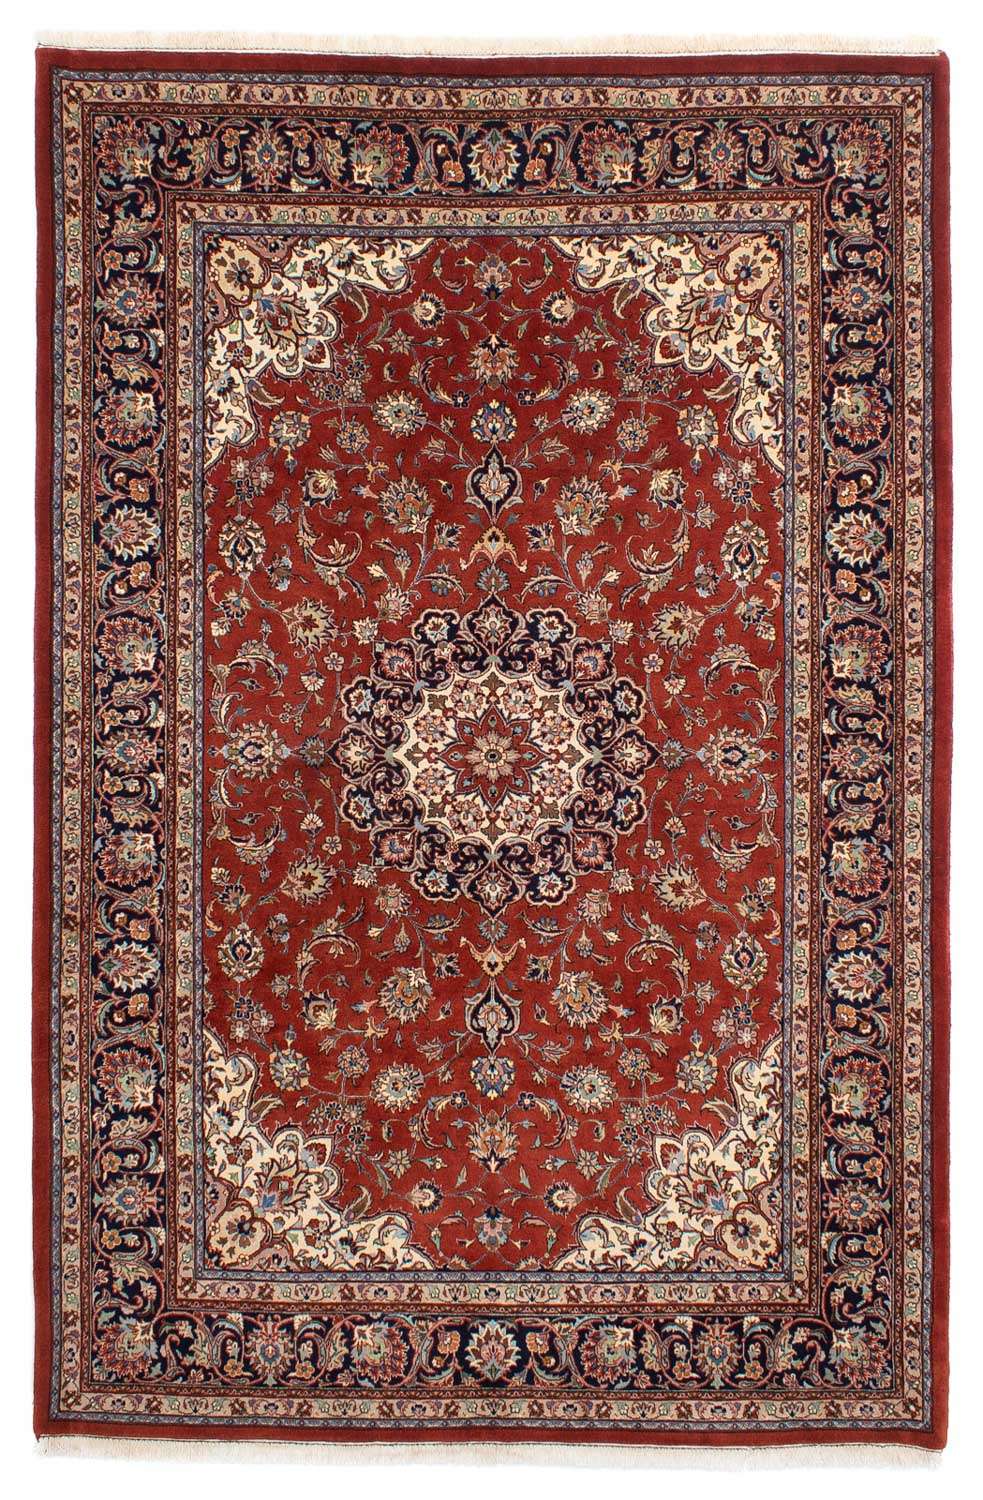 Tapis persan - Classique - 293 x 201 cm - rouge